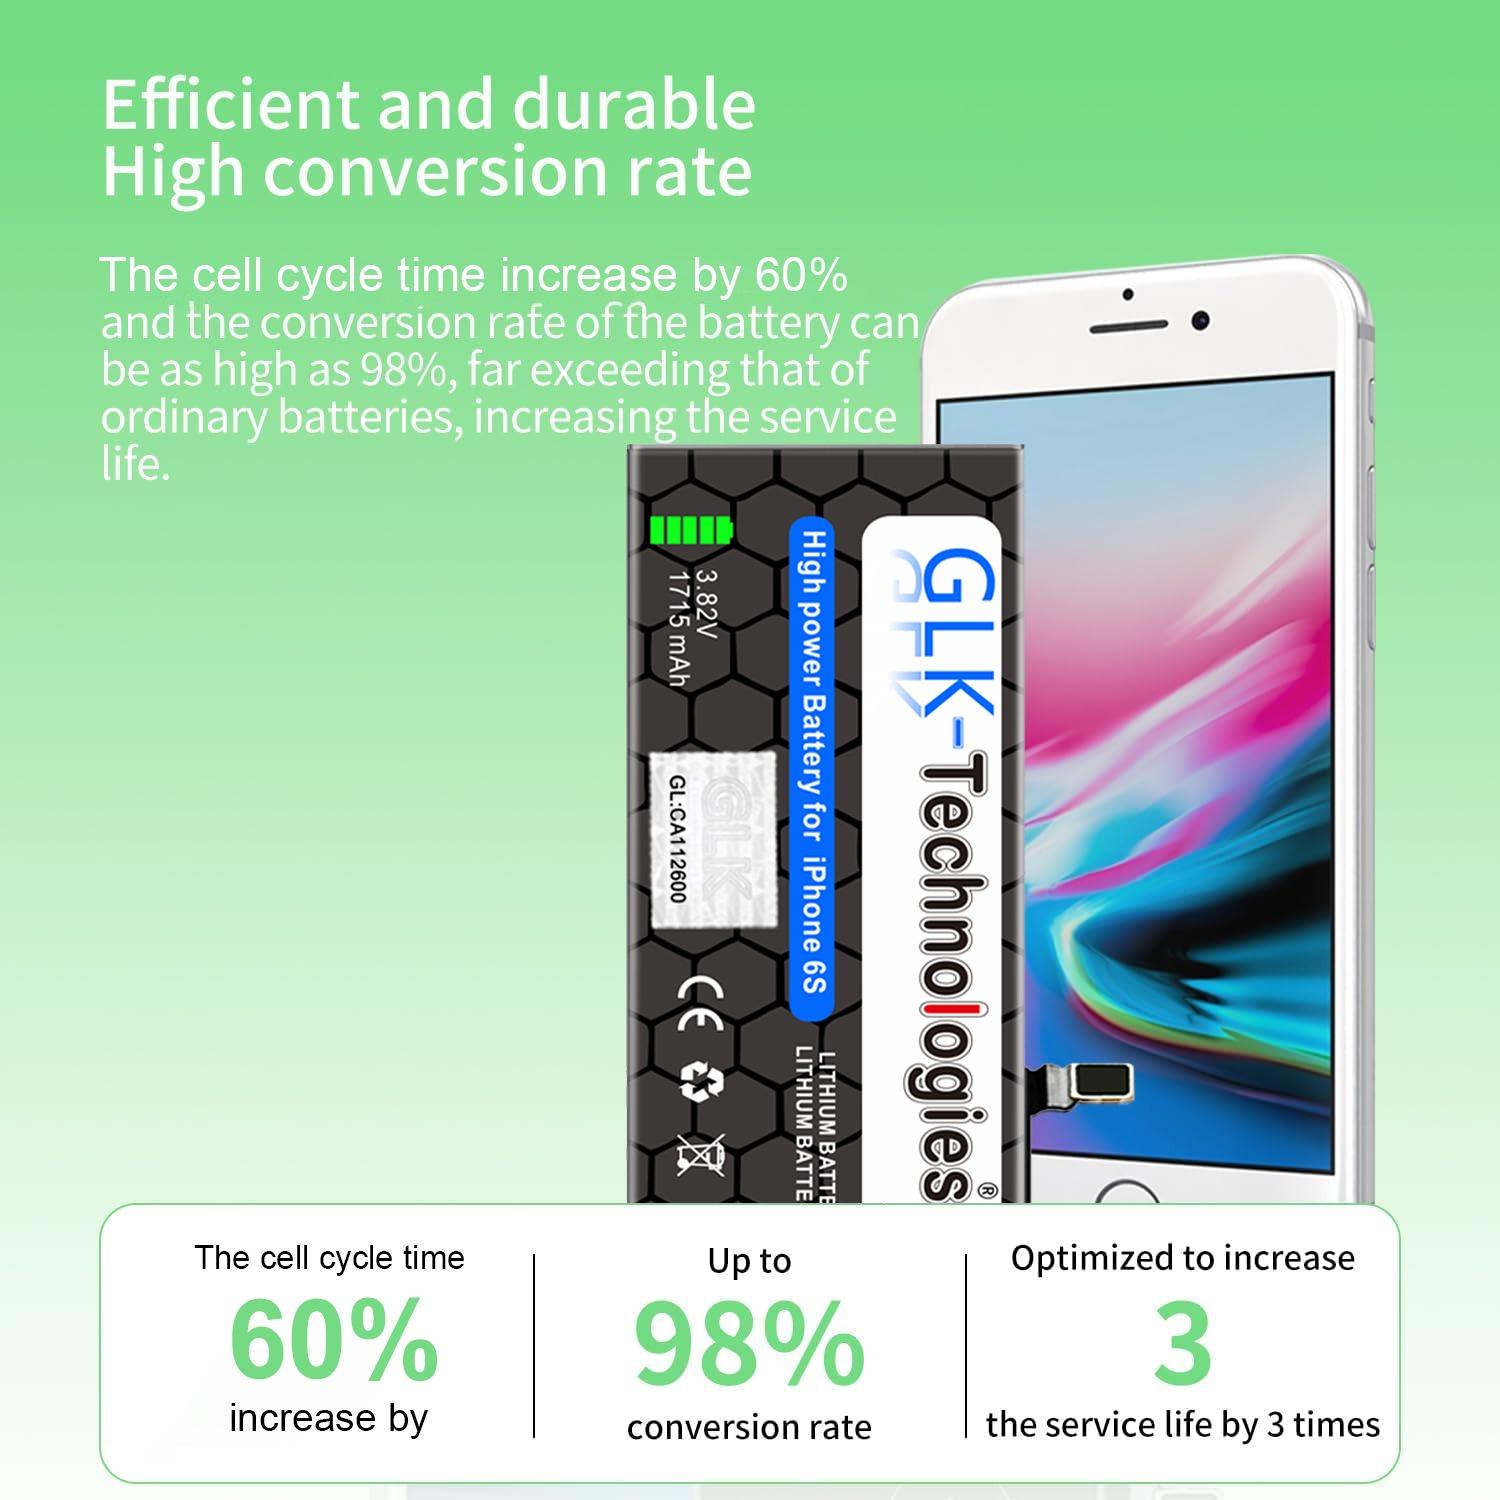 Akku iPhone Ersatz Werkzeug Kit 6S Set inkl. Lithium-Ionen-Akku GLK-TECHNOLOGIES Smartphone